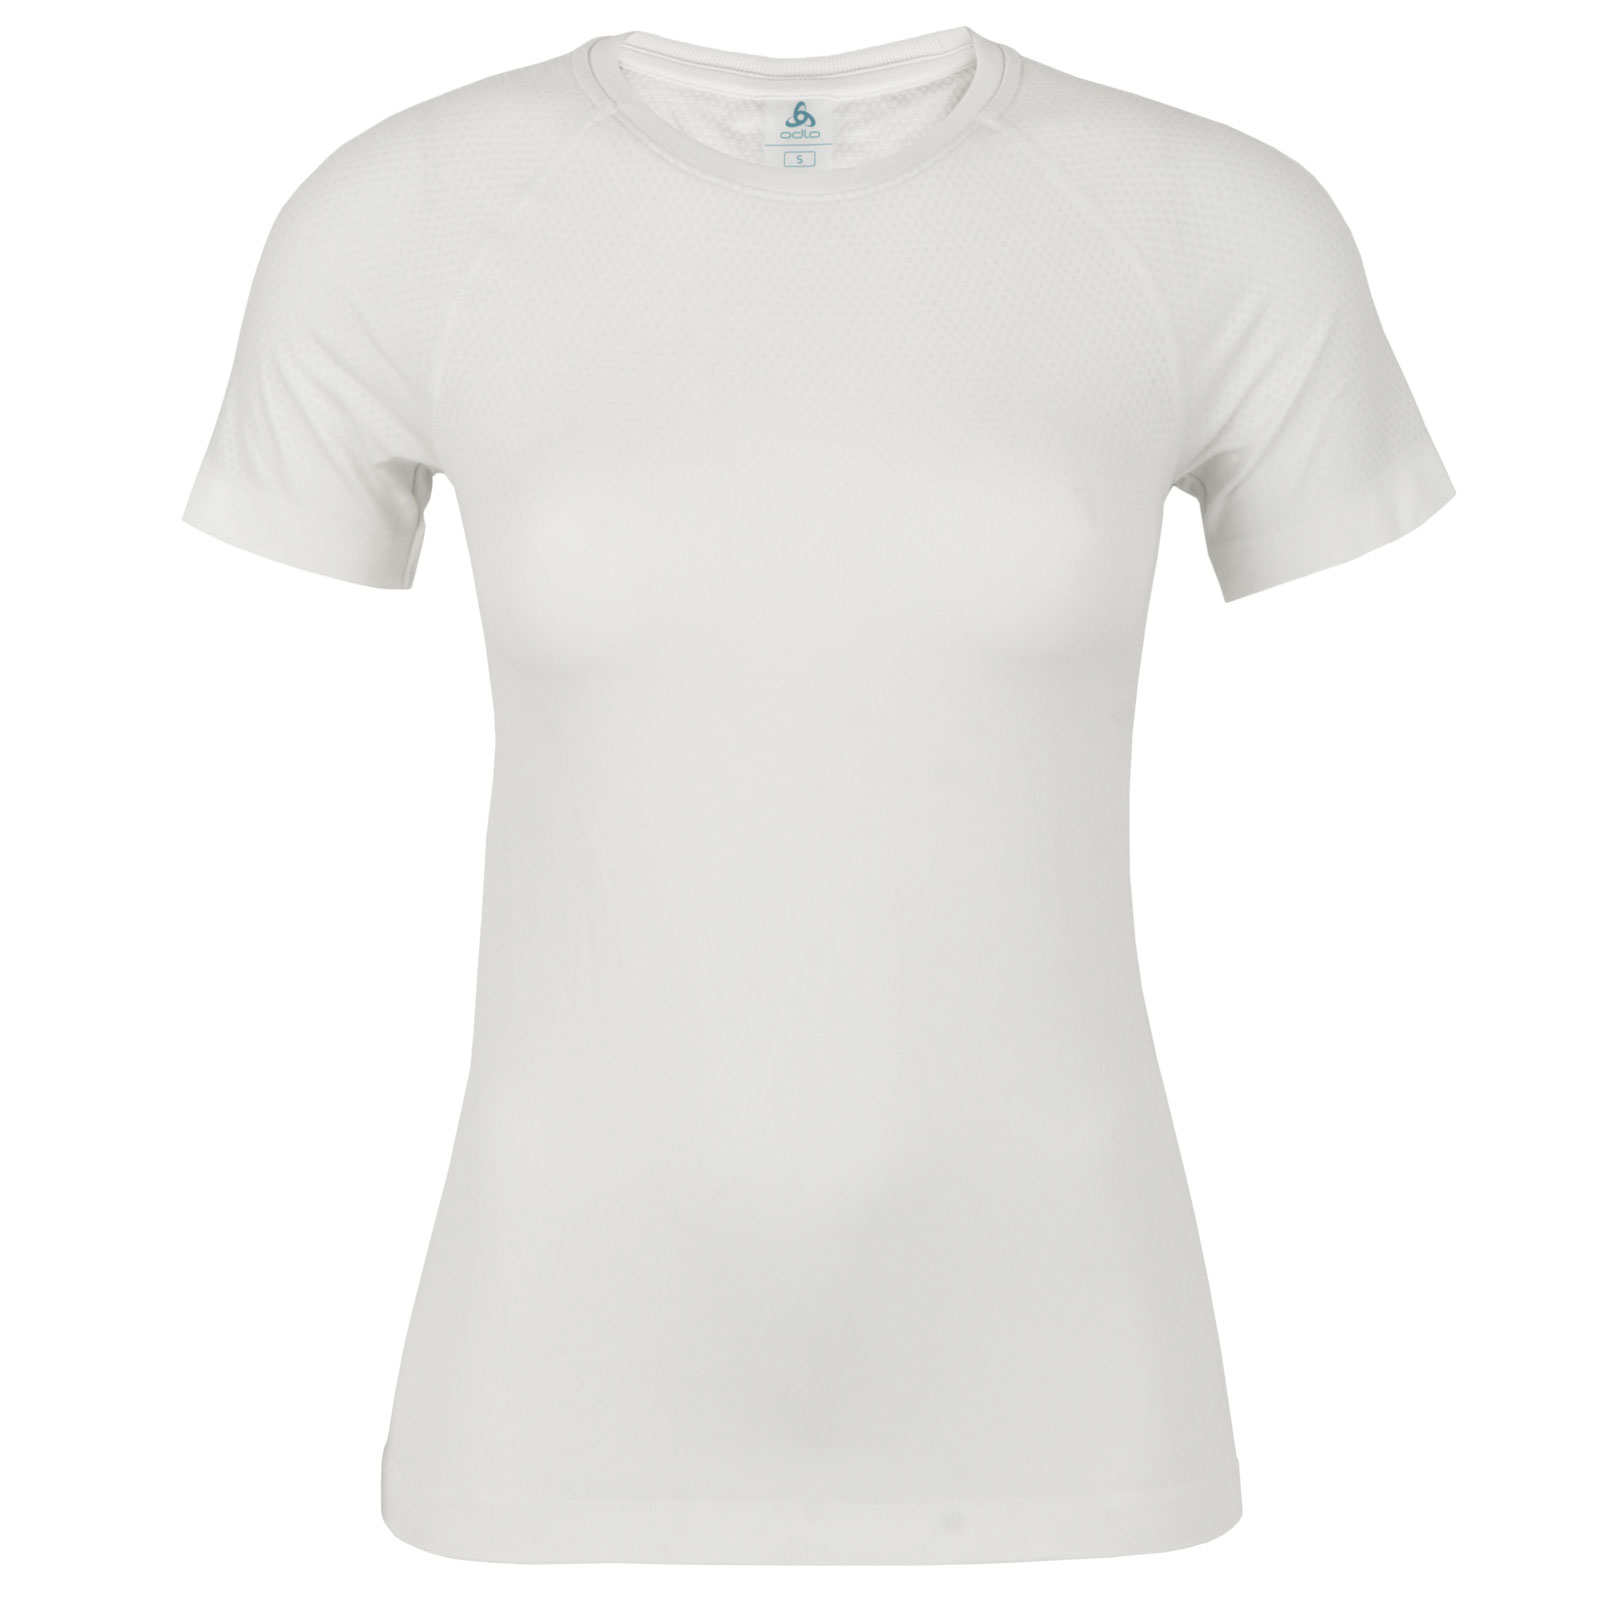 Produktbild von Odlo Performance Light Kurzarm-Unterhemd Damen - weiß